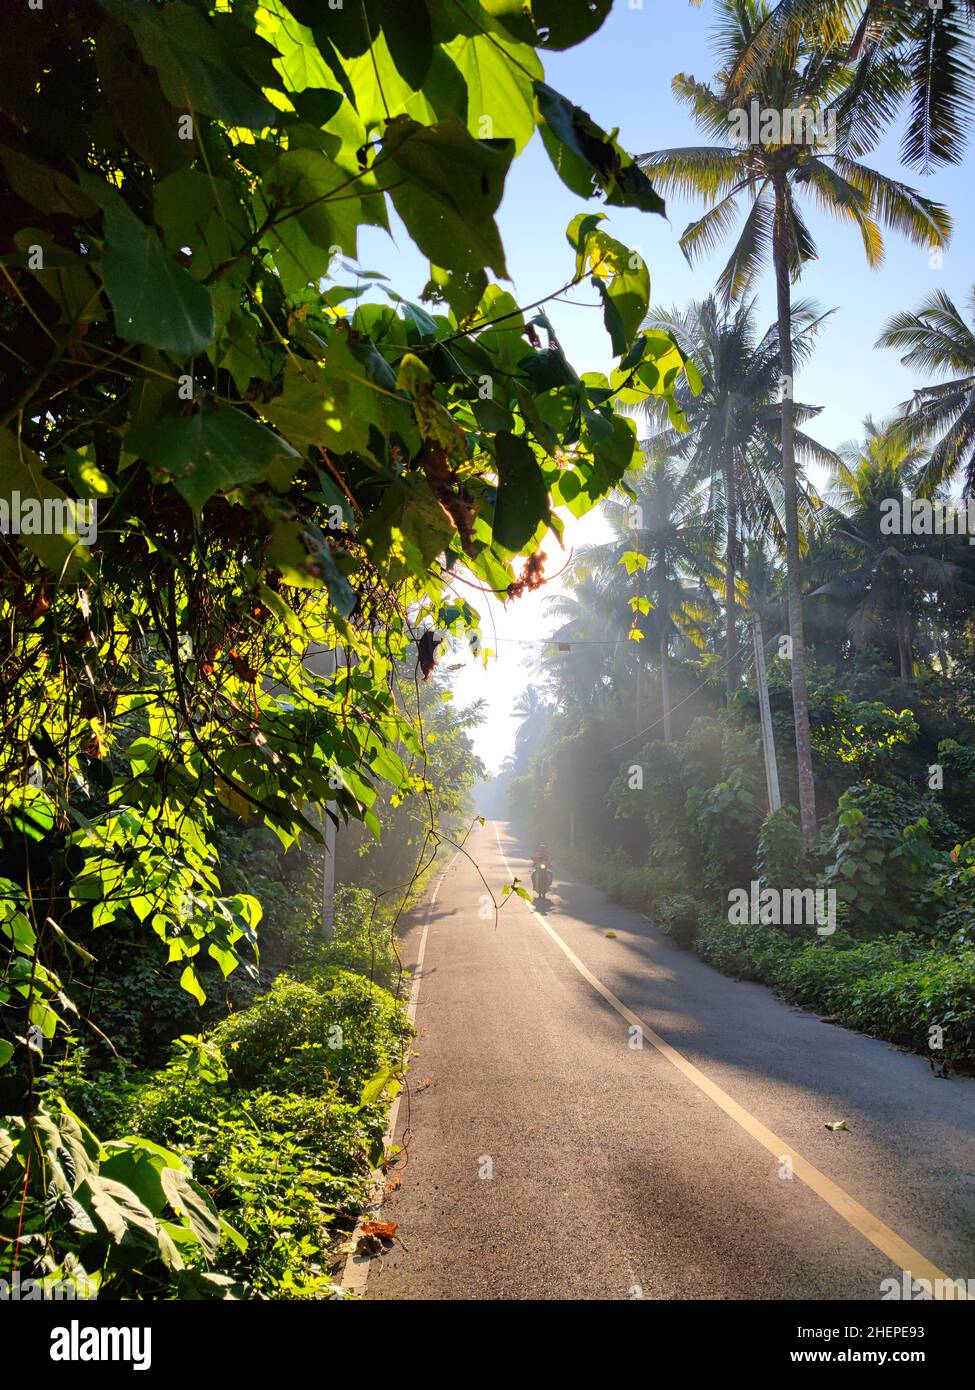 Thailand, Krabi, Ao Nang, jungle road with coconut trees and a single motorbike Stock Photo